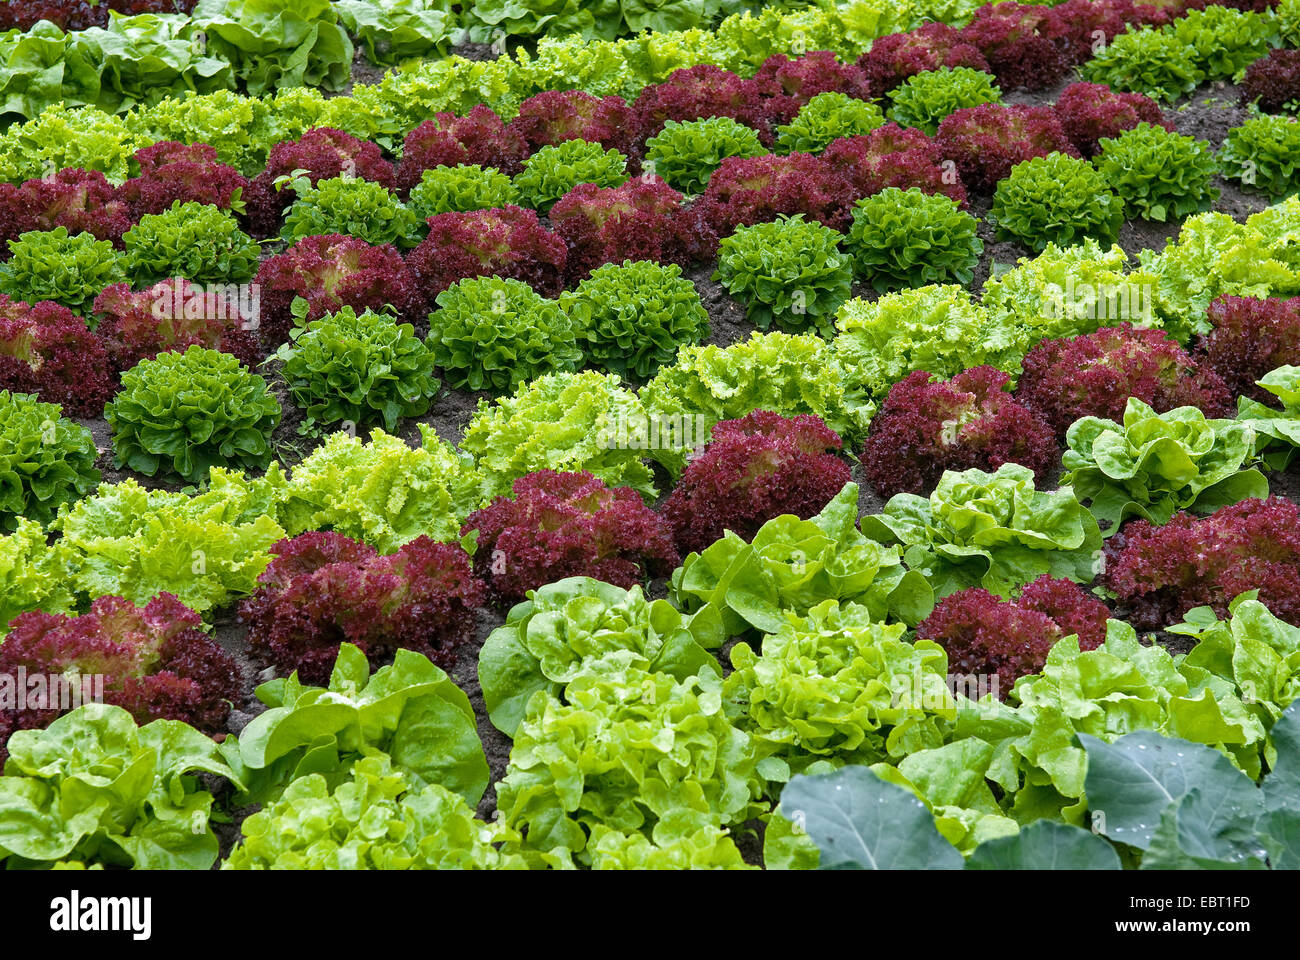 garden lettuce (Lactuca sativa crispa, Lactuca sativa var. crispa), vegetable patch Stock Photo